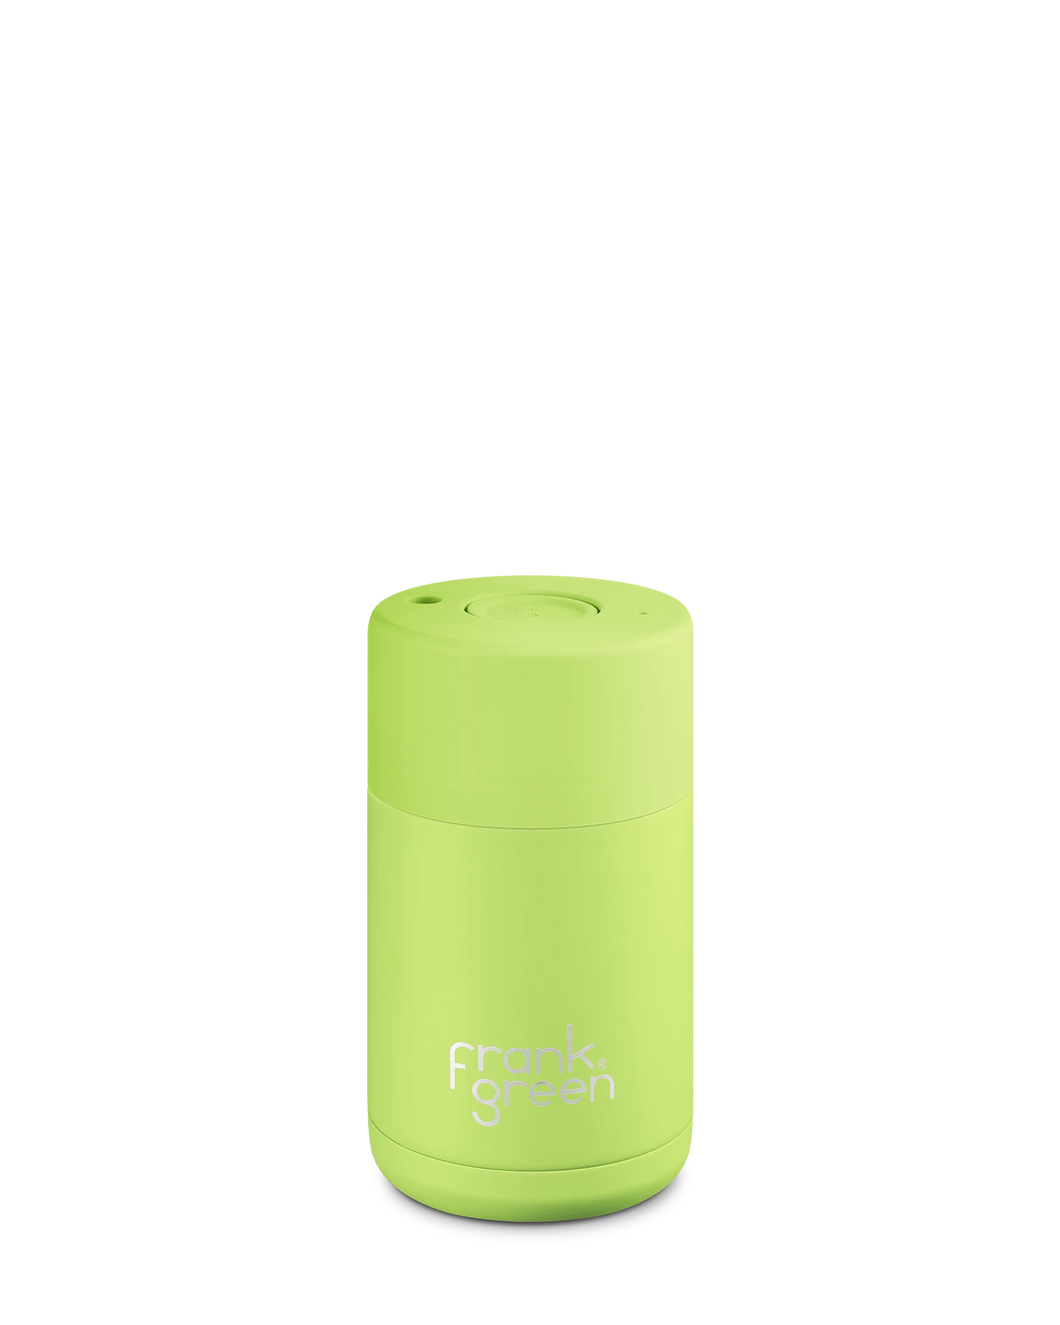 Frank Green Ceramic Reusable Cup - Pistachio Green - 10oz/295ml | Pink Lemonade